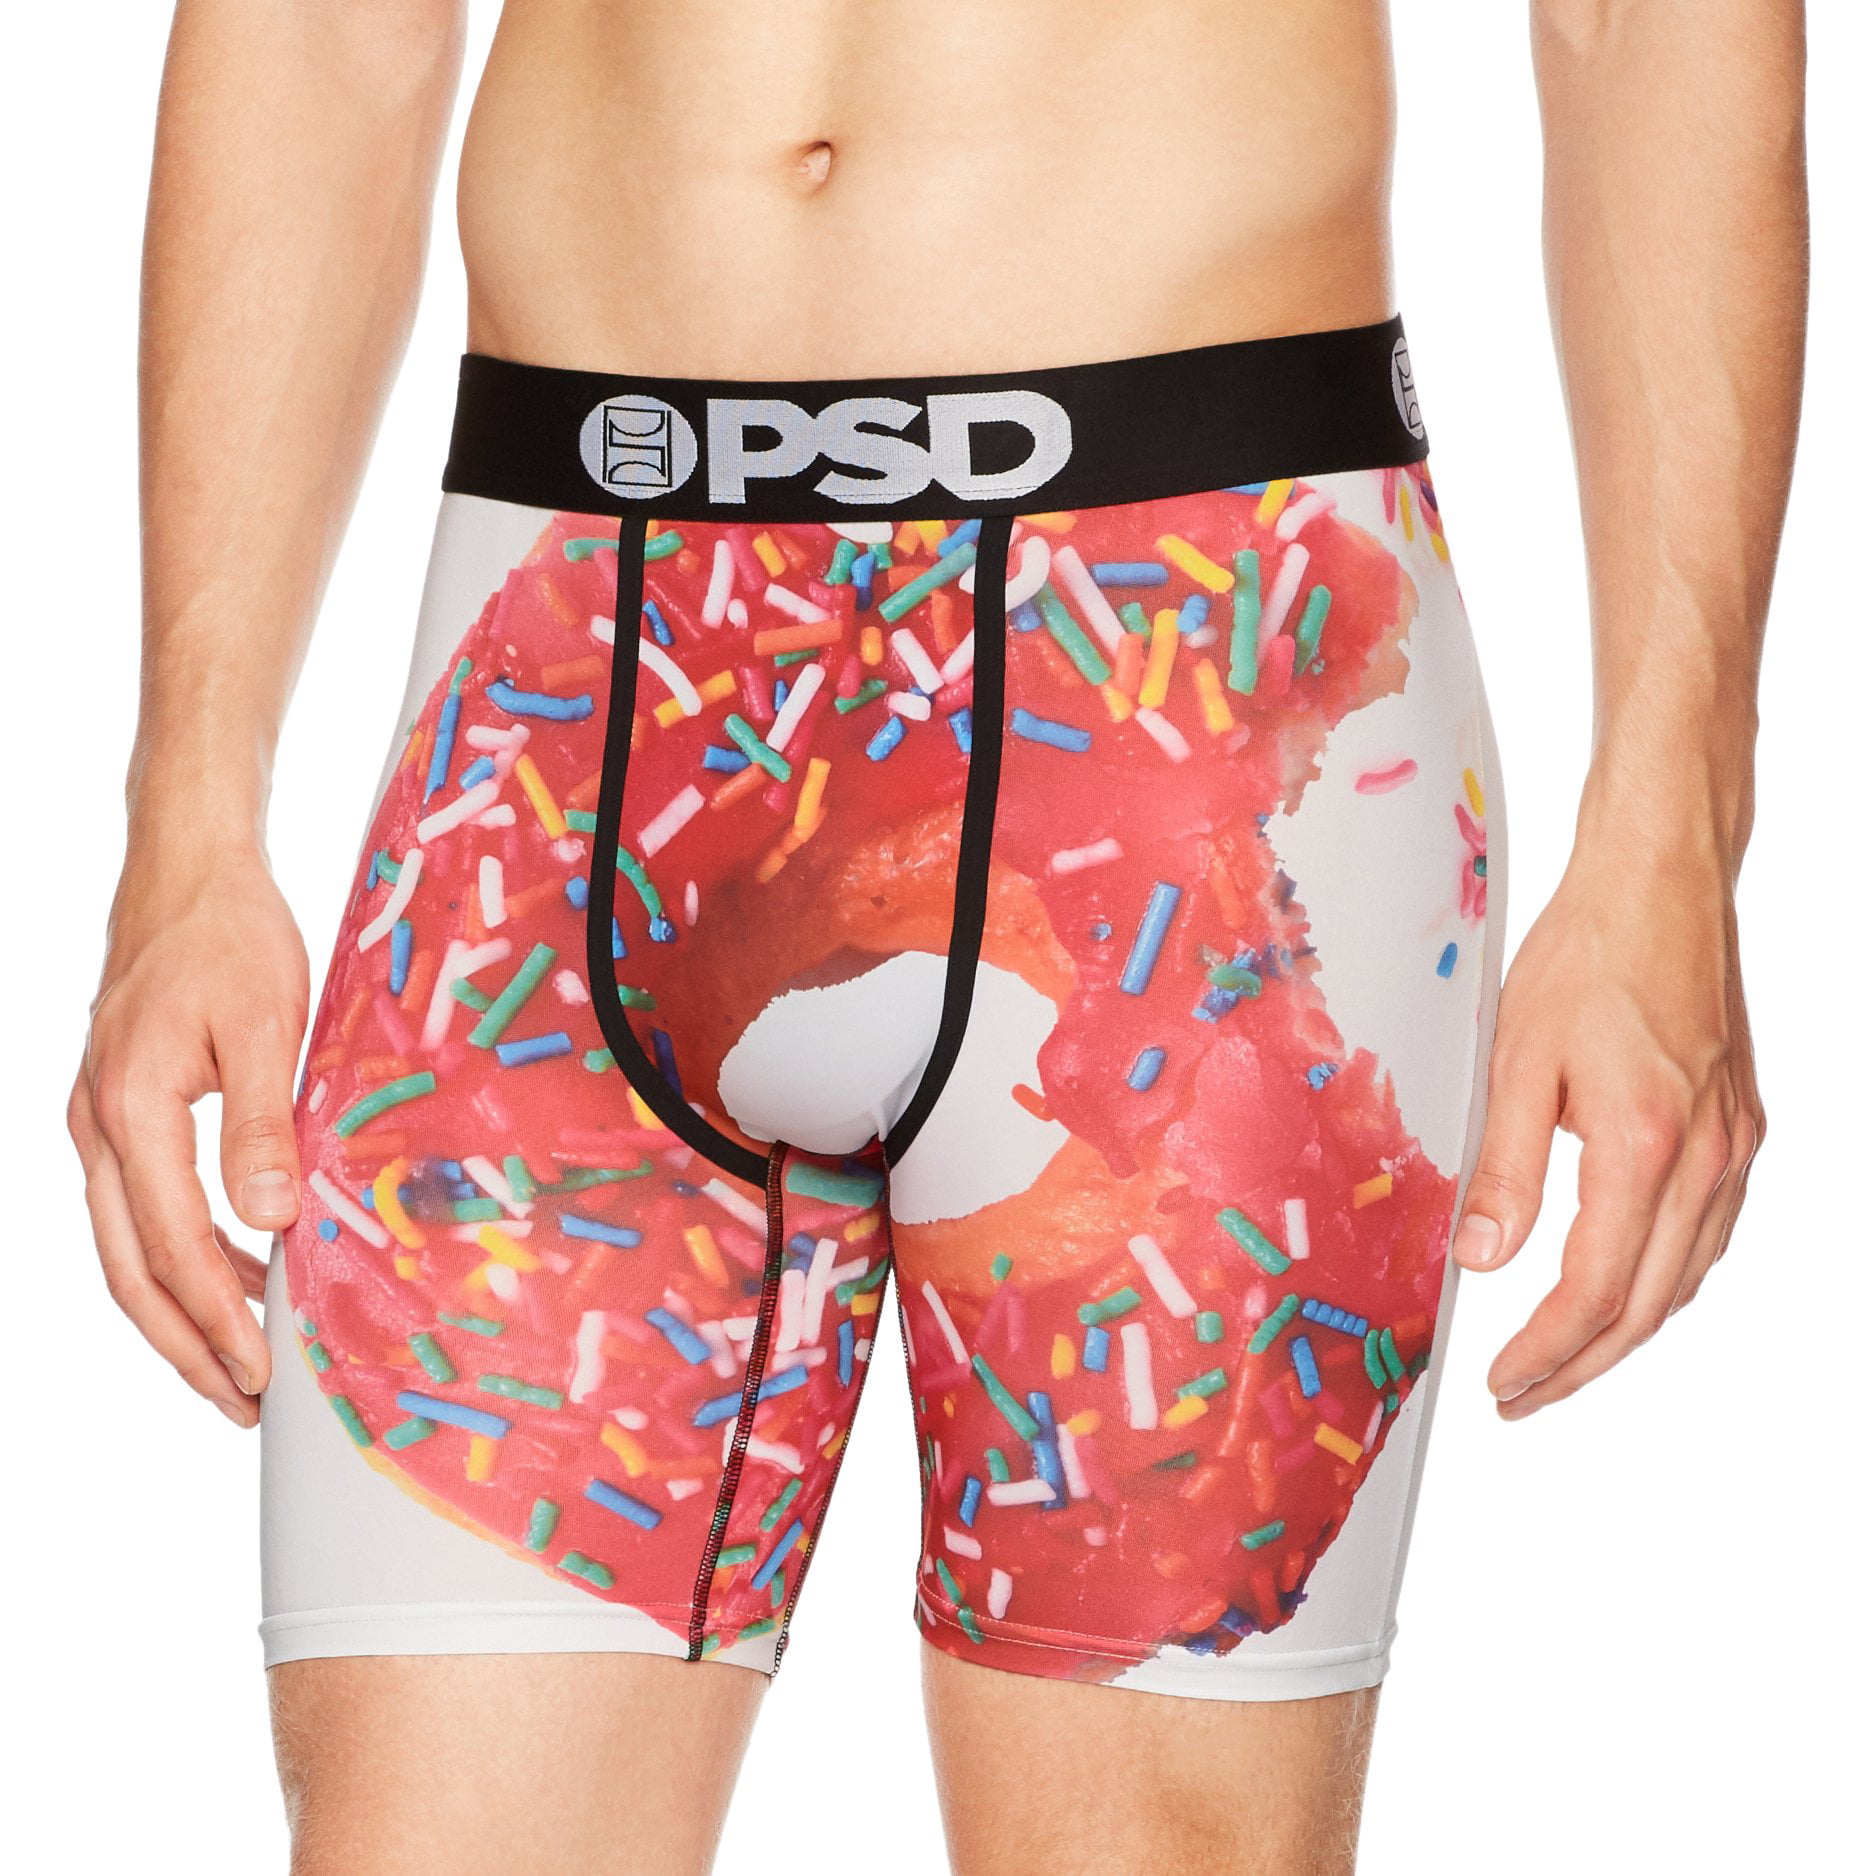 Download PSD - PSD Underwear Men's Donut - Walmart.com - Walmart.com